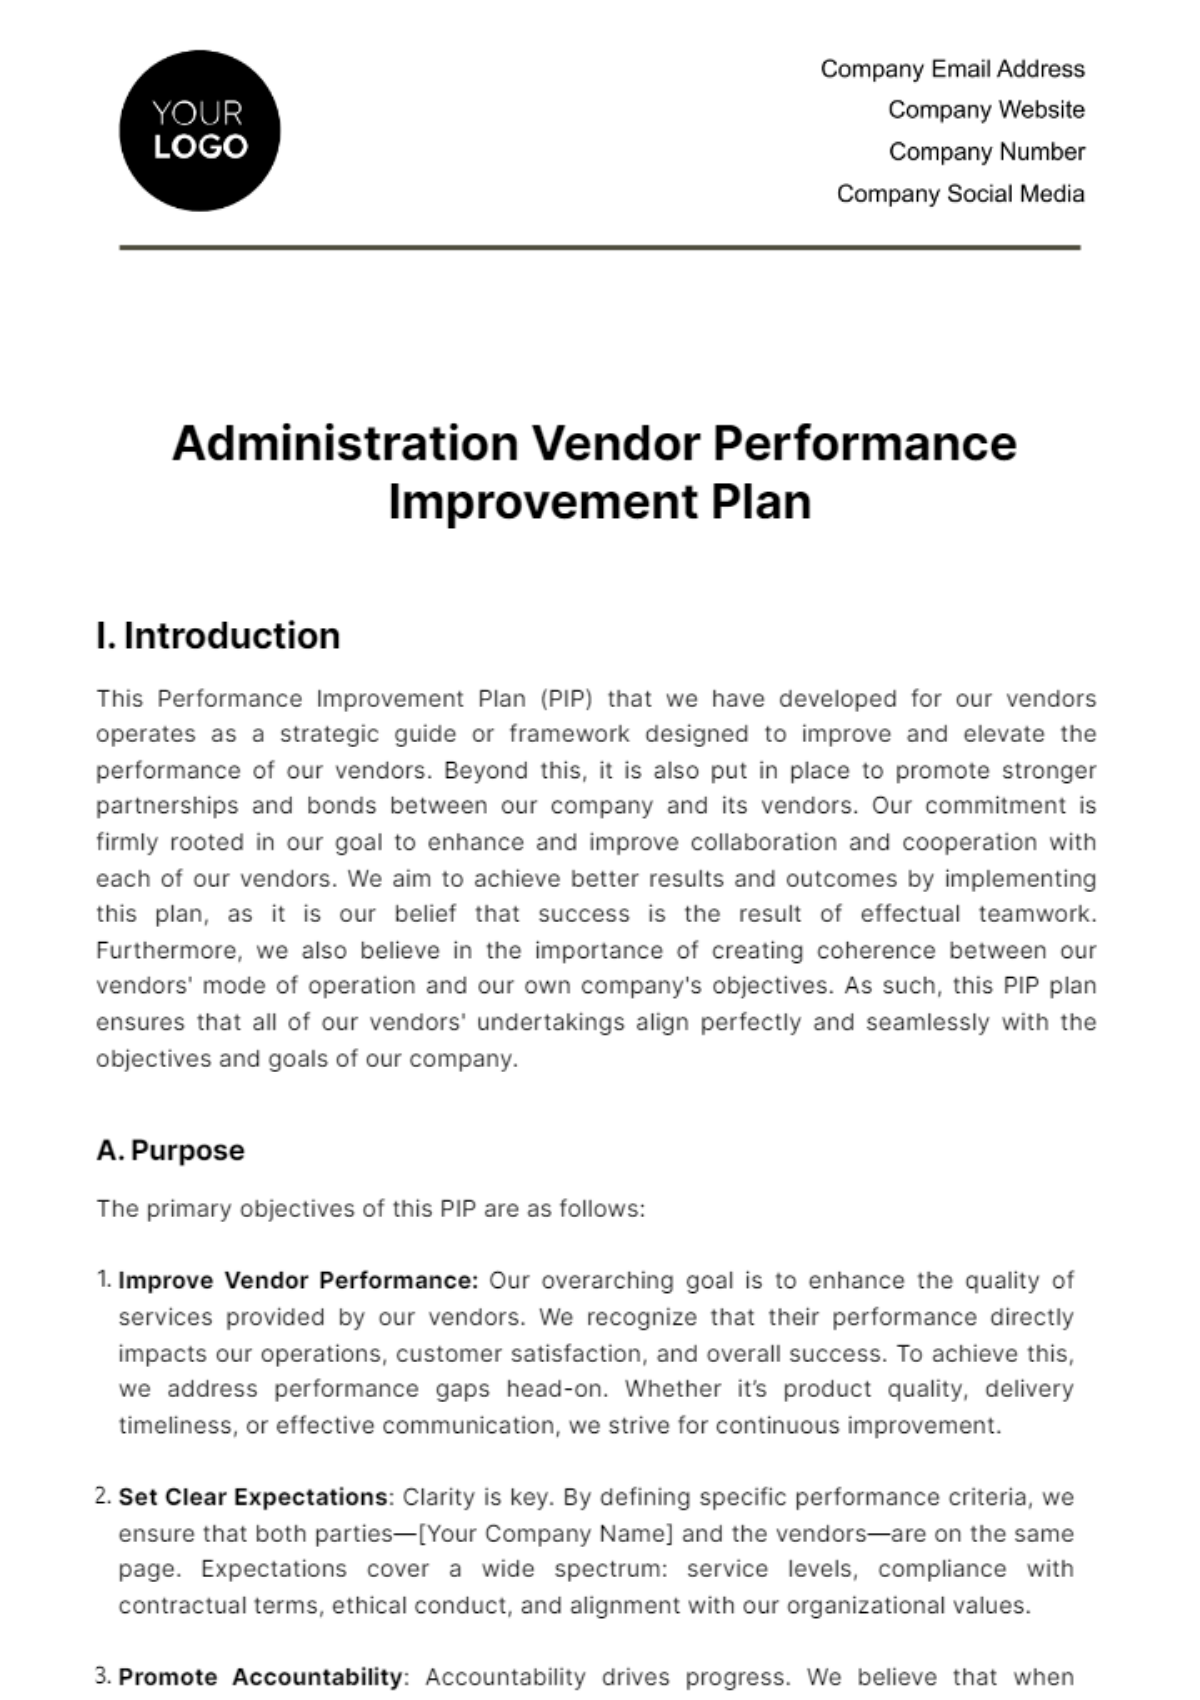 Administration Vendor Performance Improvement Plan Template